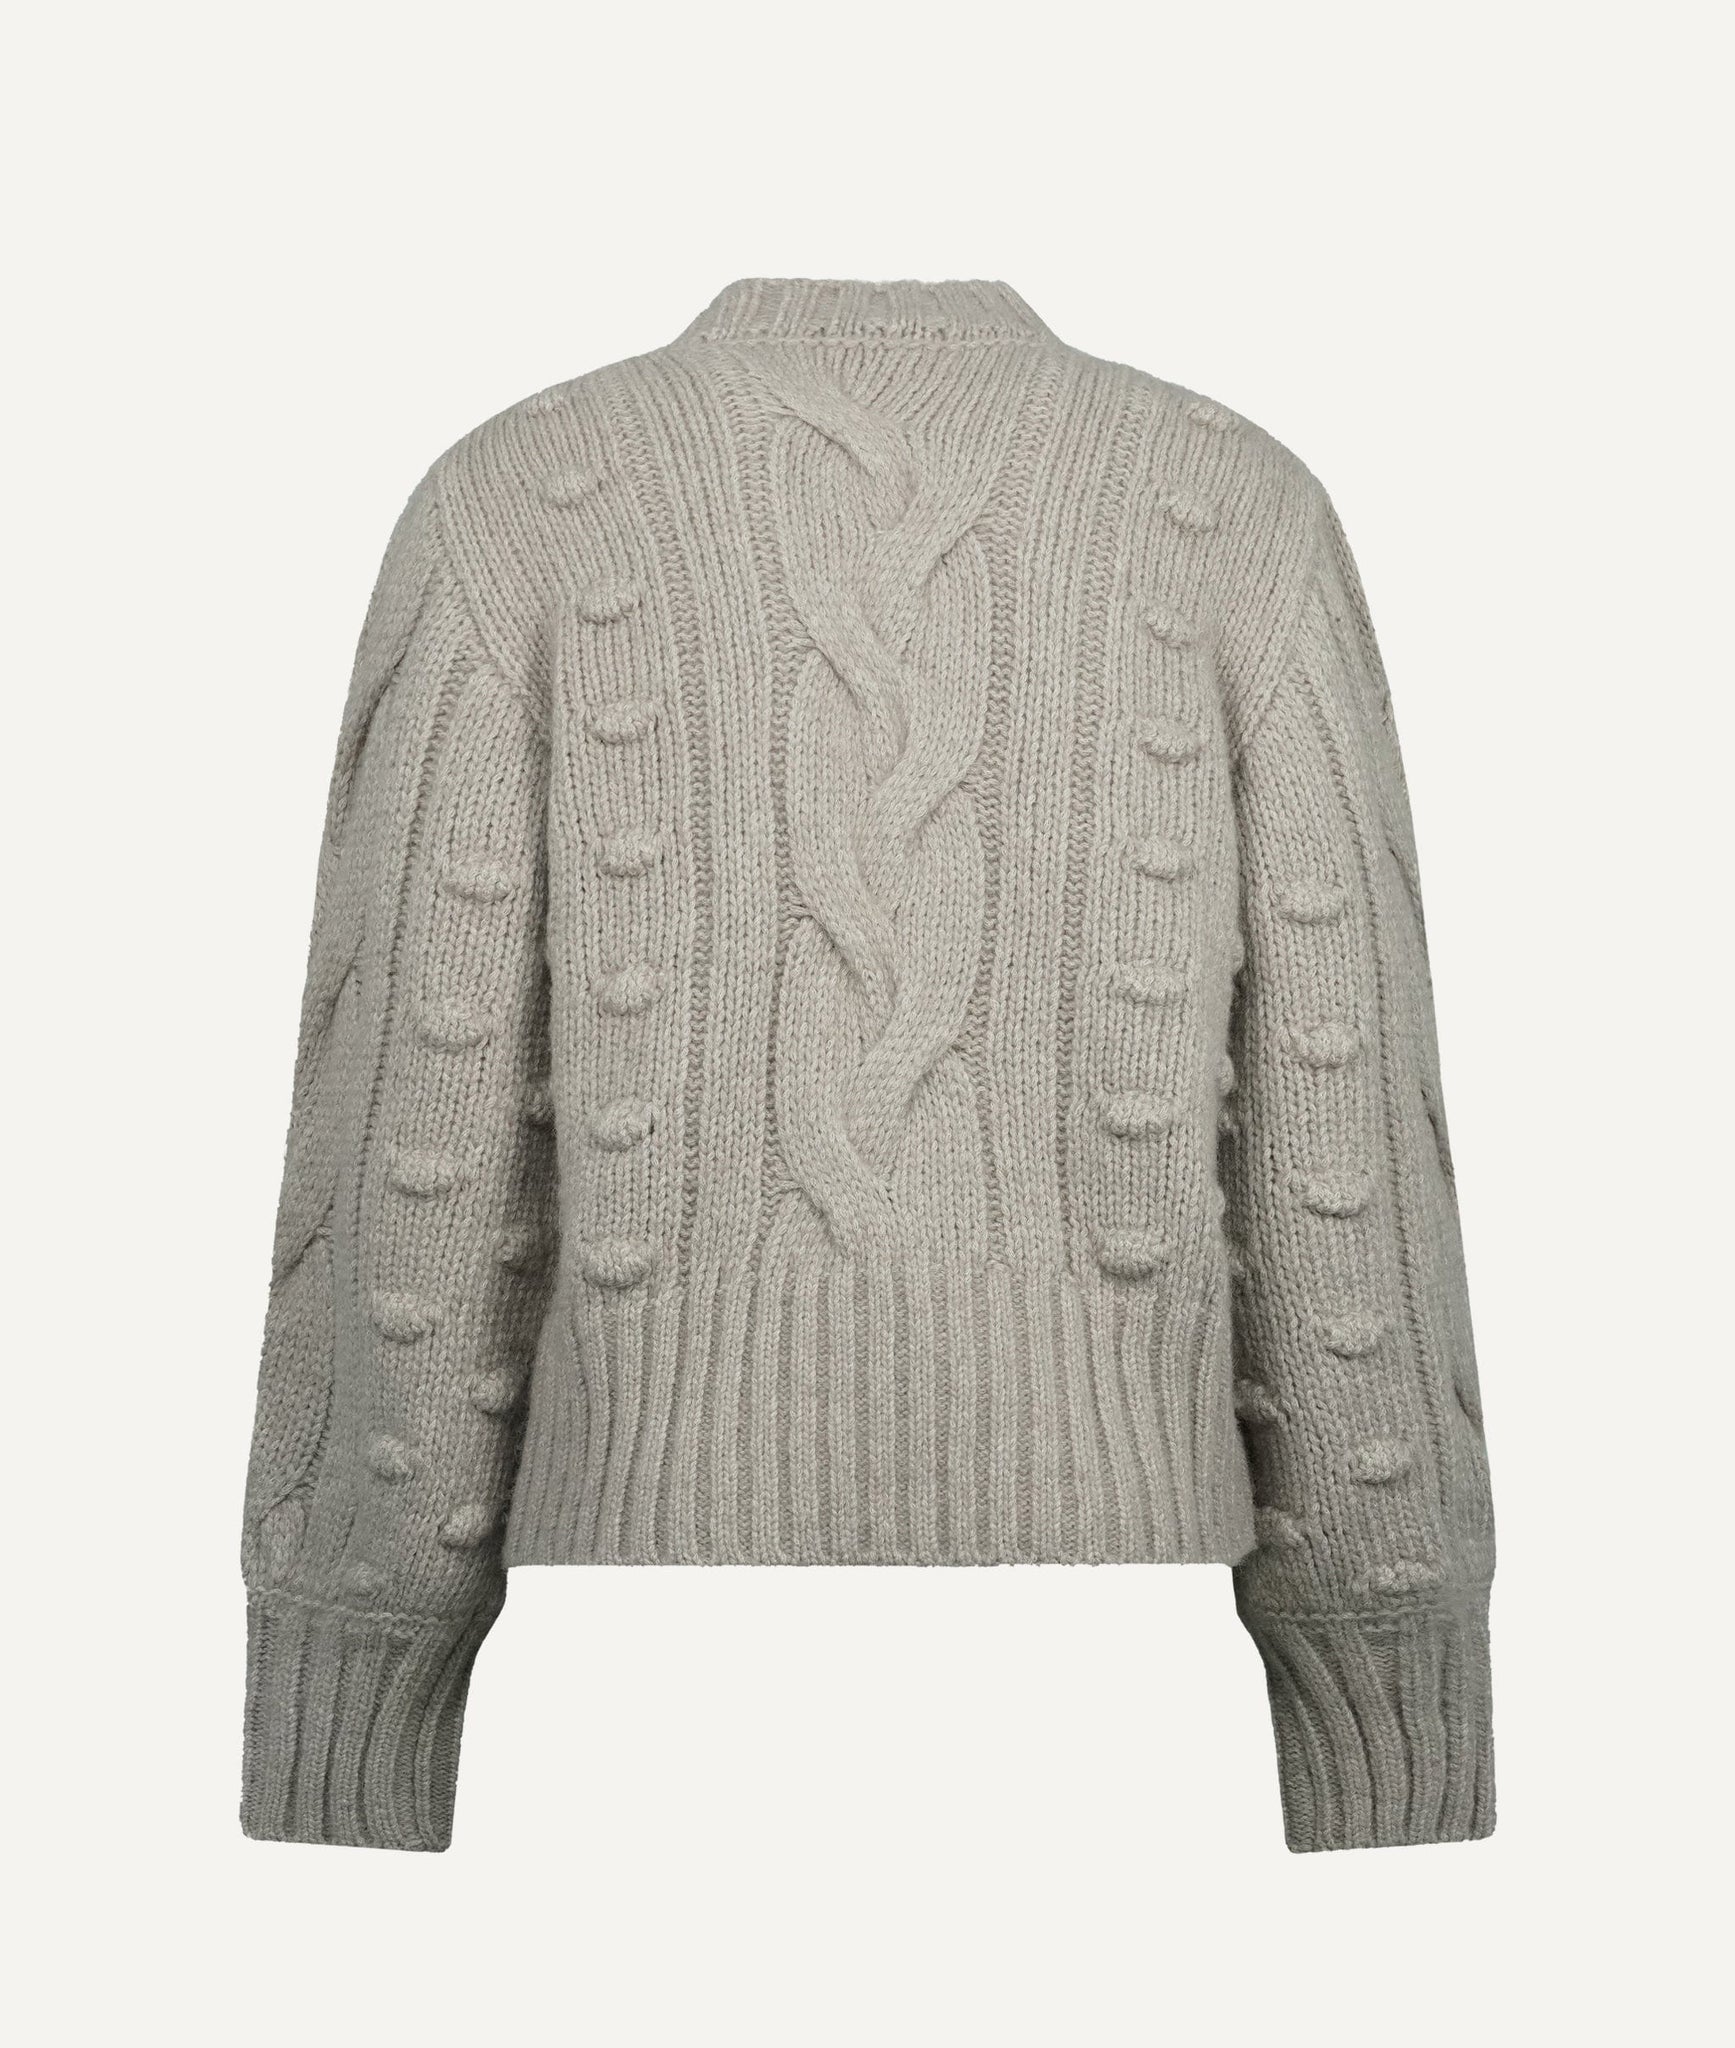 Eleventy - Sweater in Alapaca & Cotton